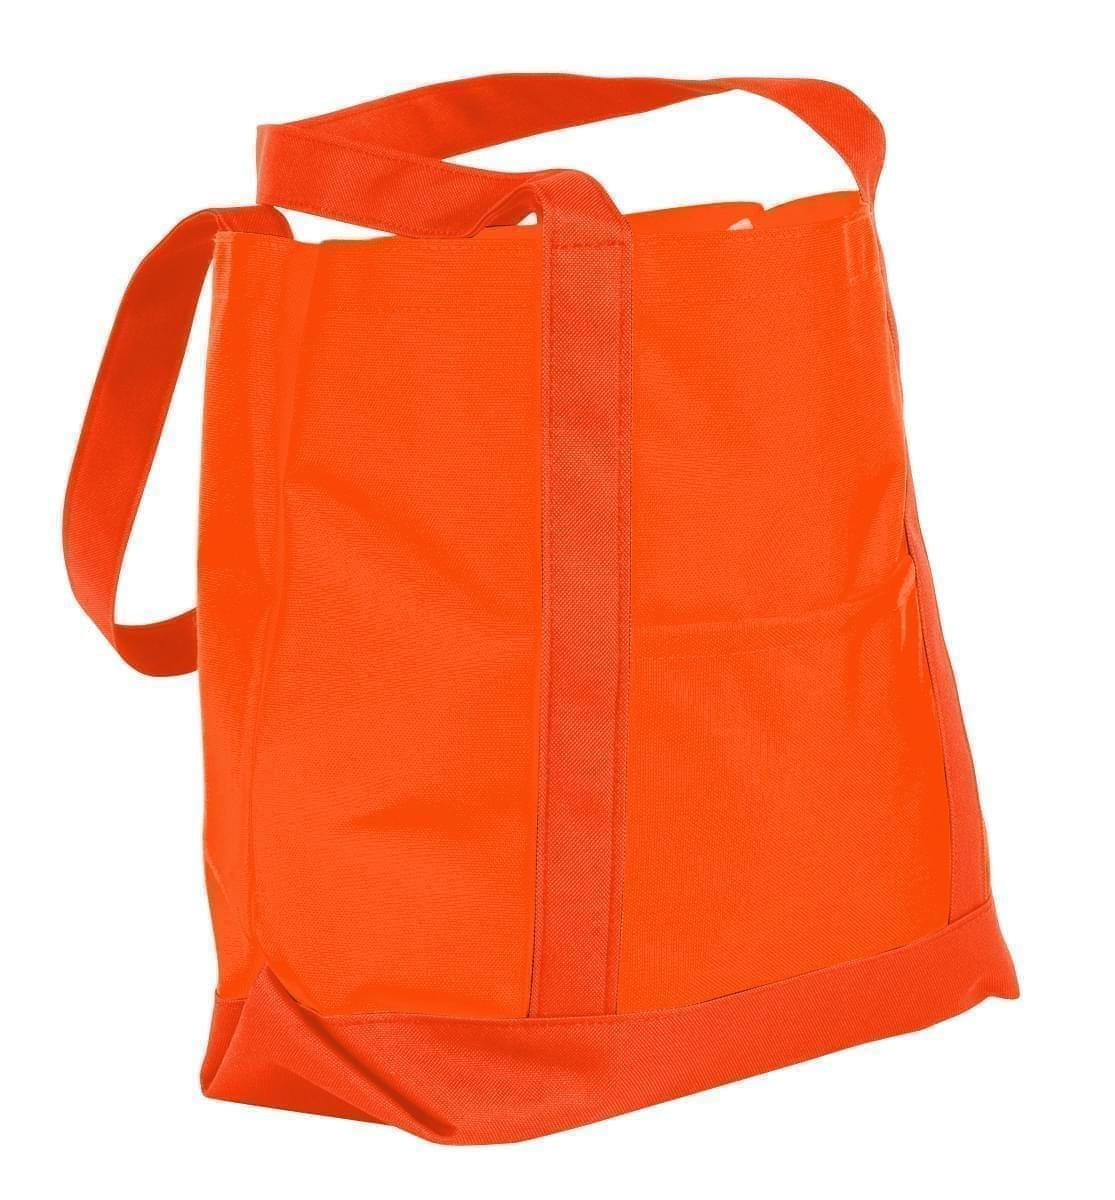 USA Made Nylon Poly Boat Tote Bags, Orange-Orange, XAACL1UAXJ